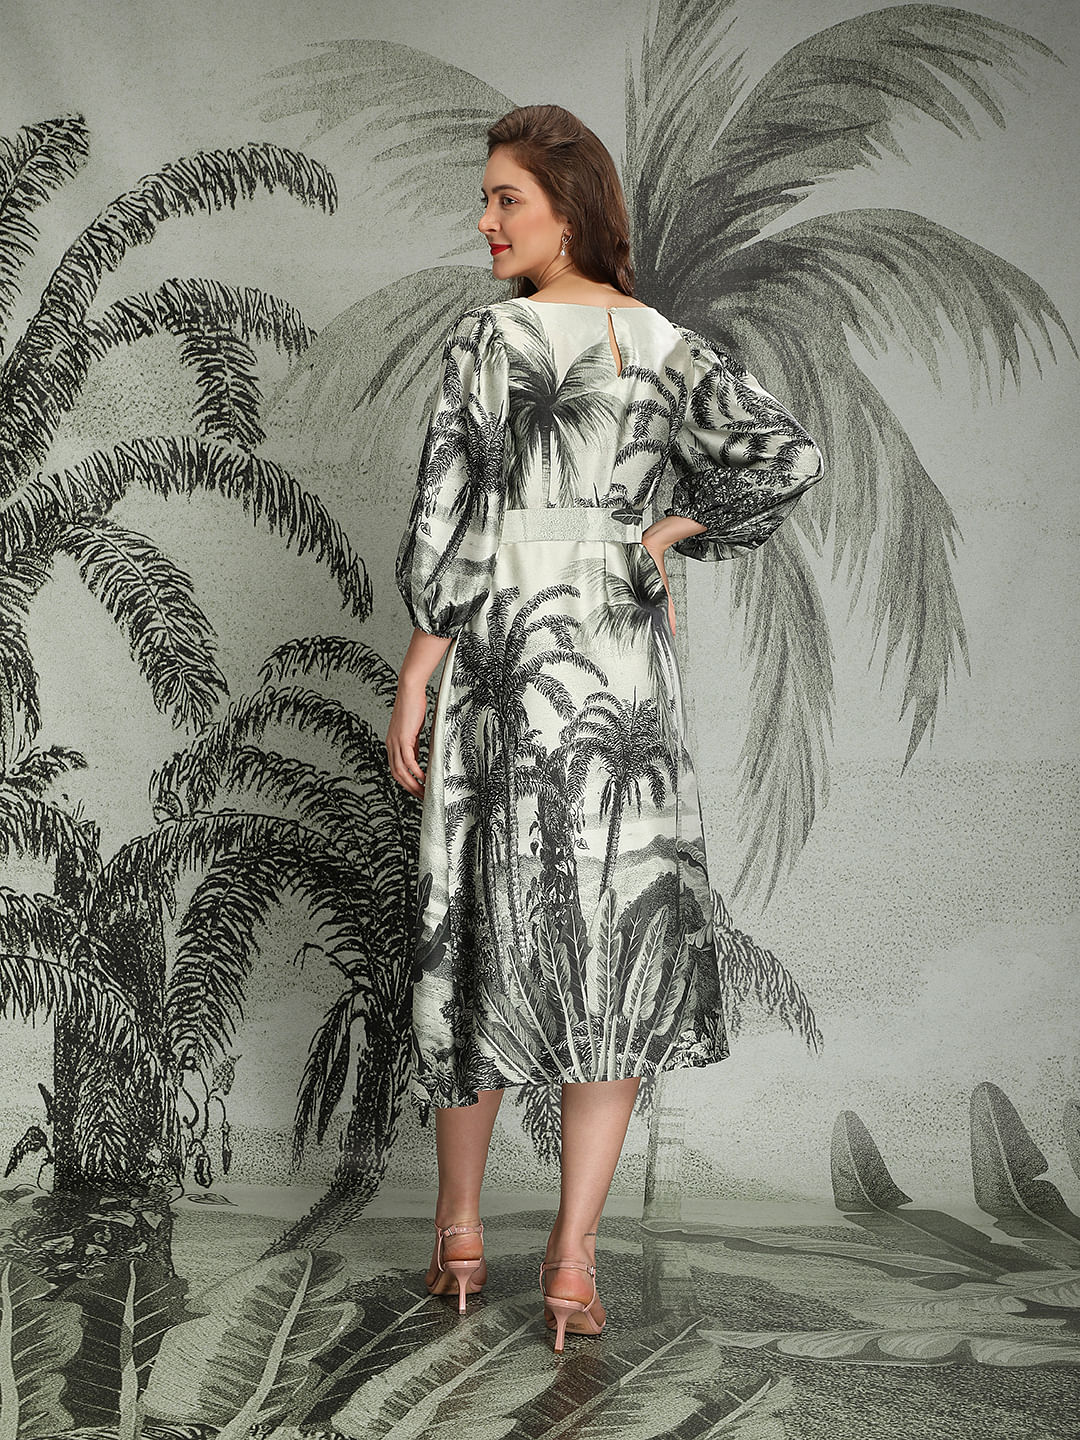 Tropical Print Dress x 2: McCall's 6915 & 8215 — strictstitchery